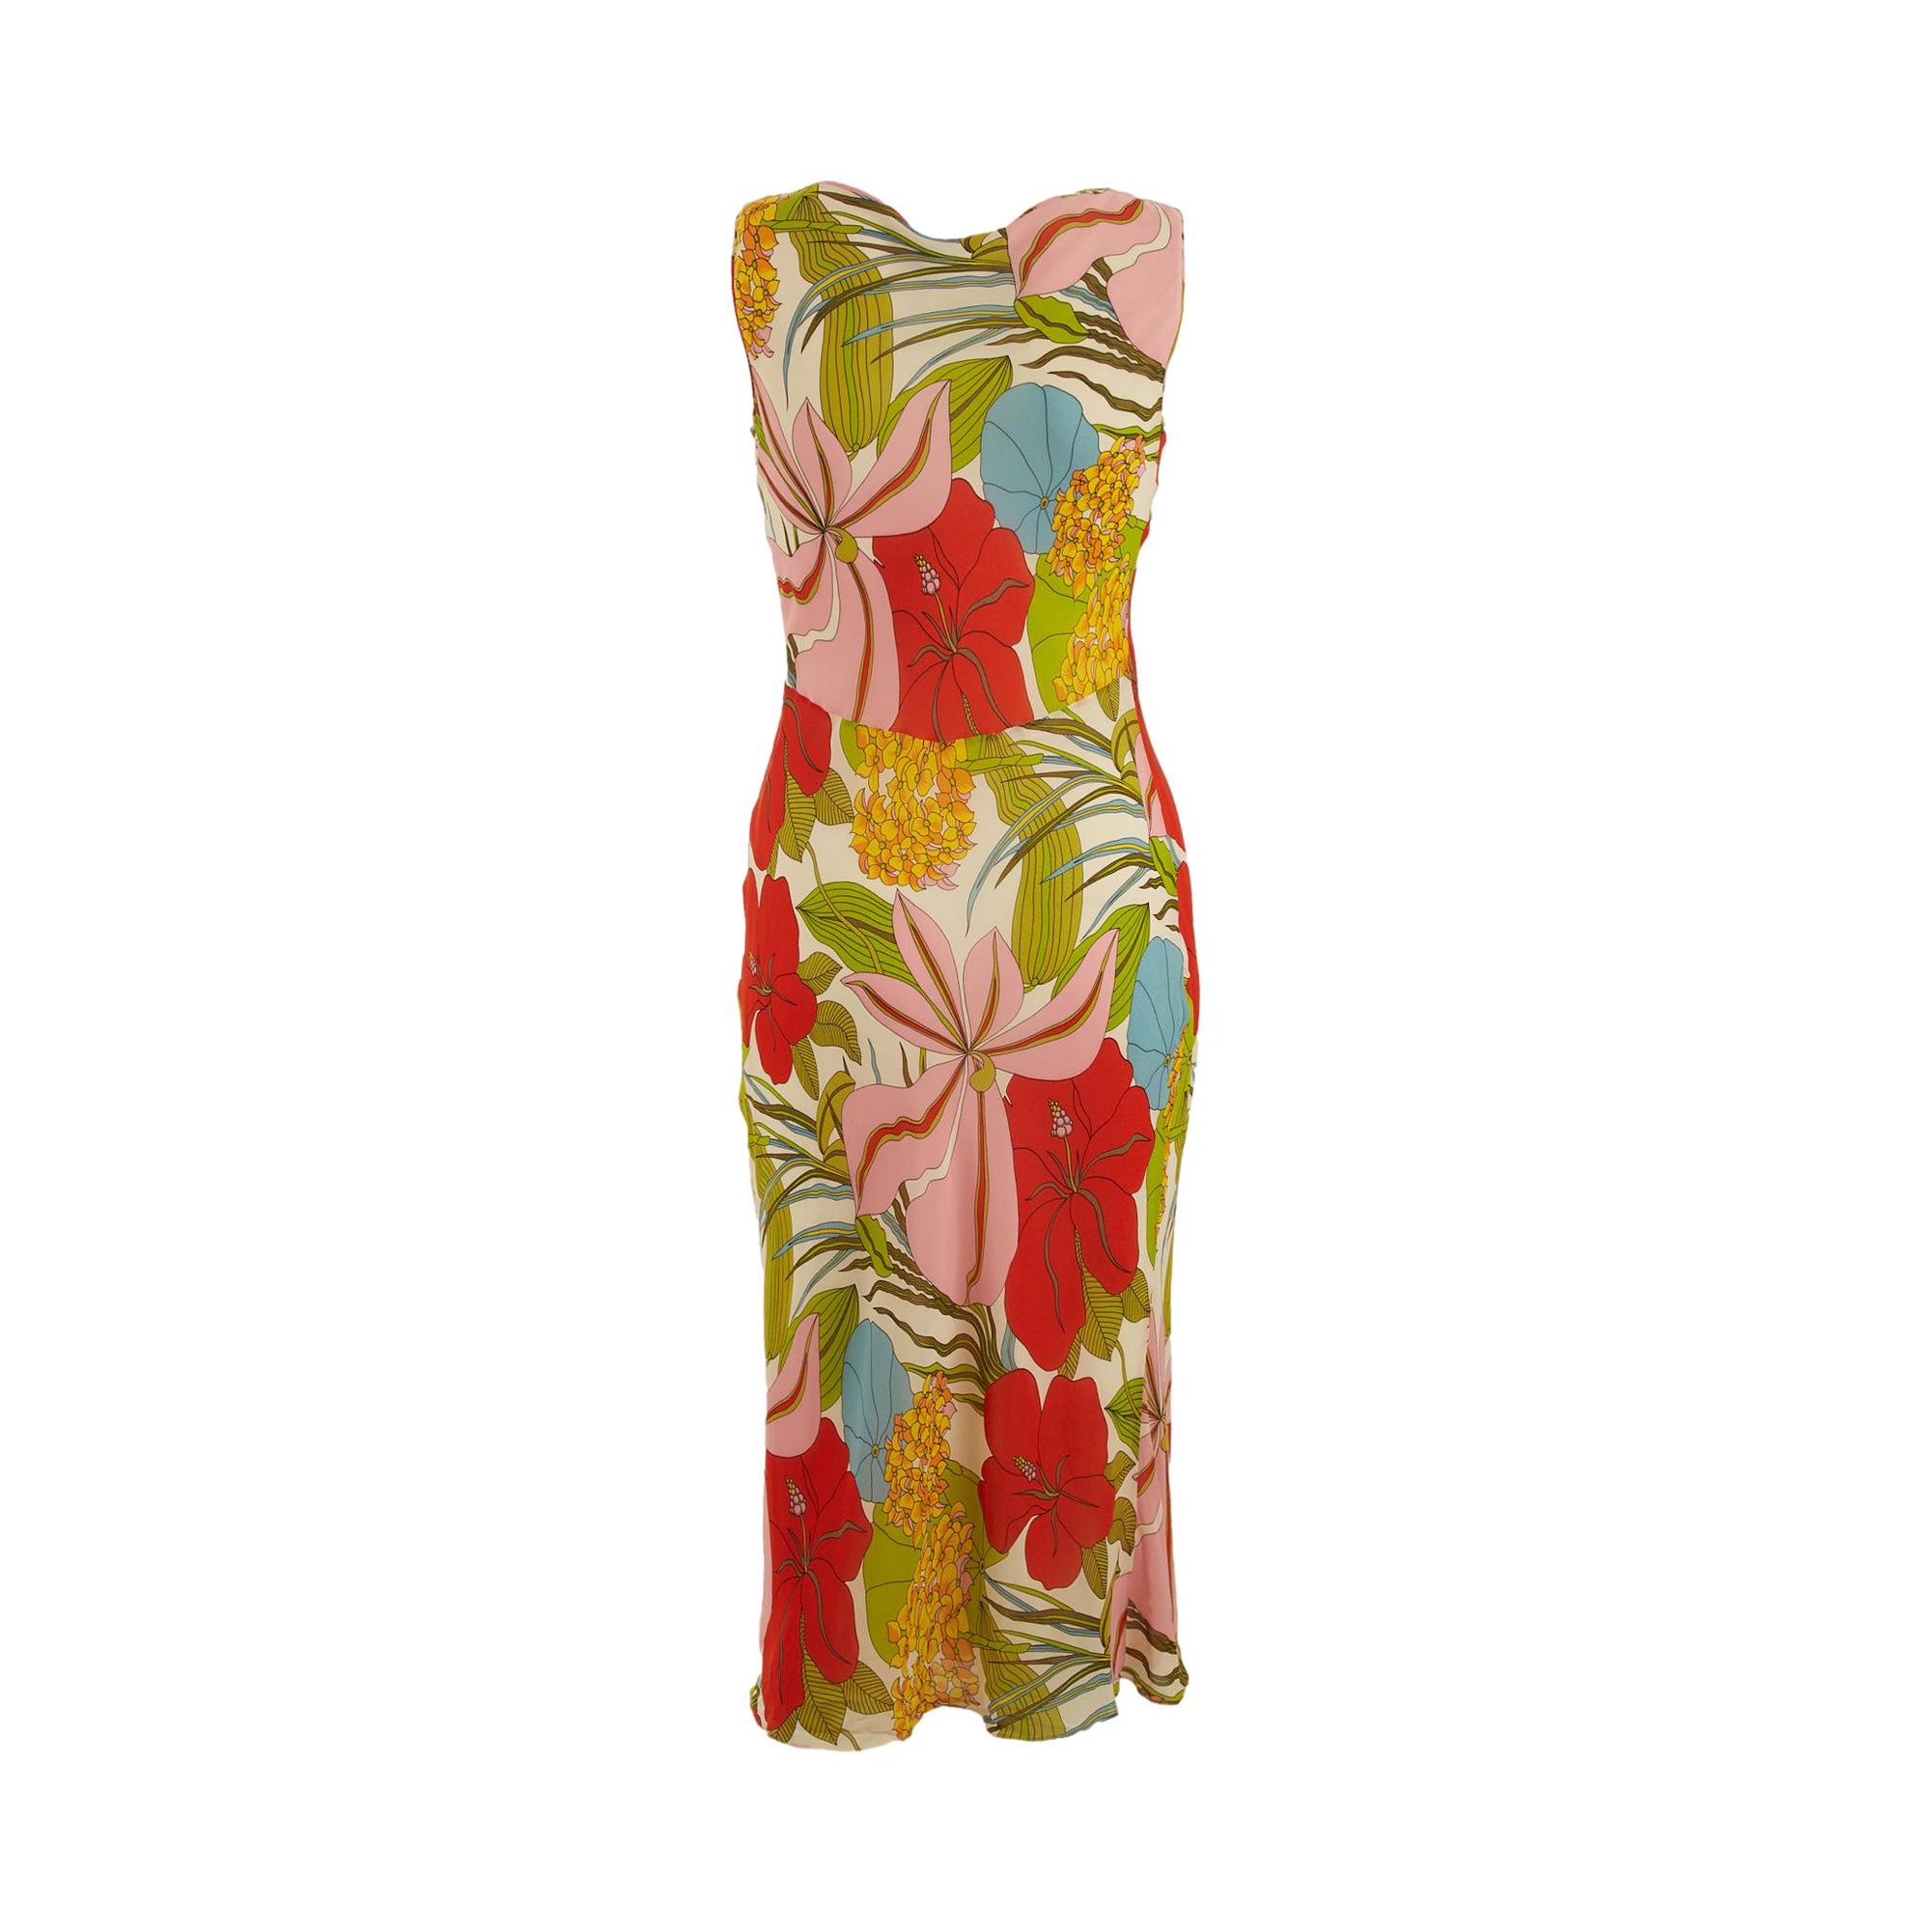 Galliano Multicolor Floral Print Dress